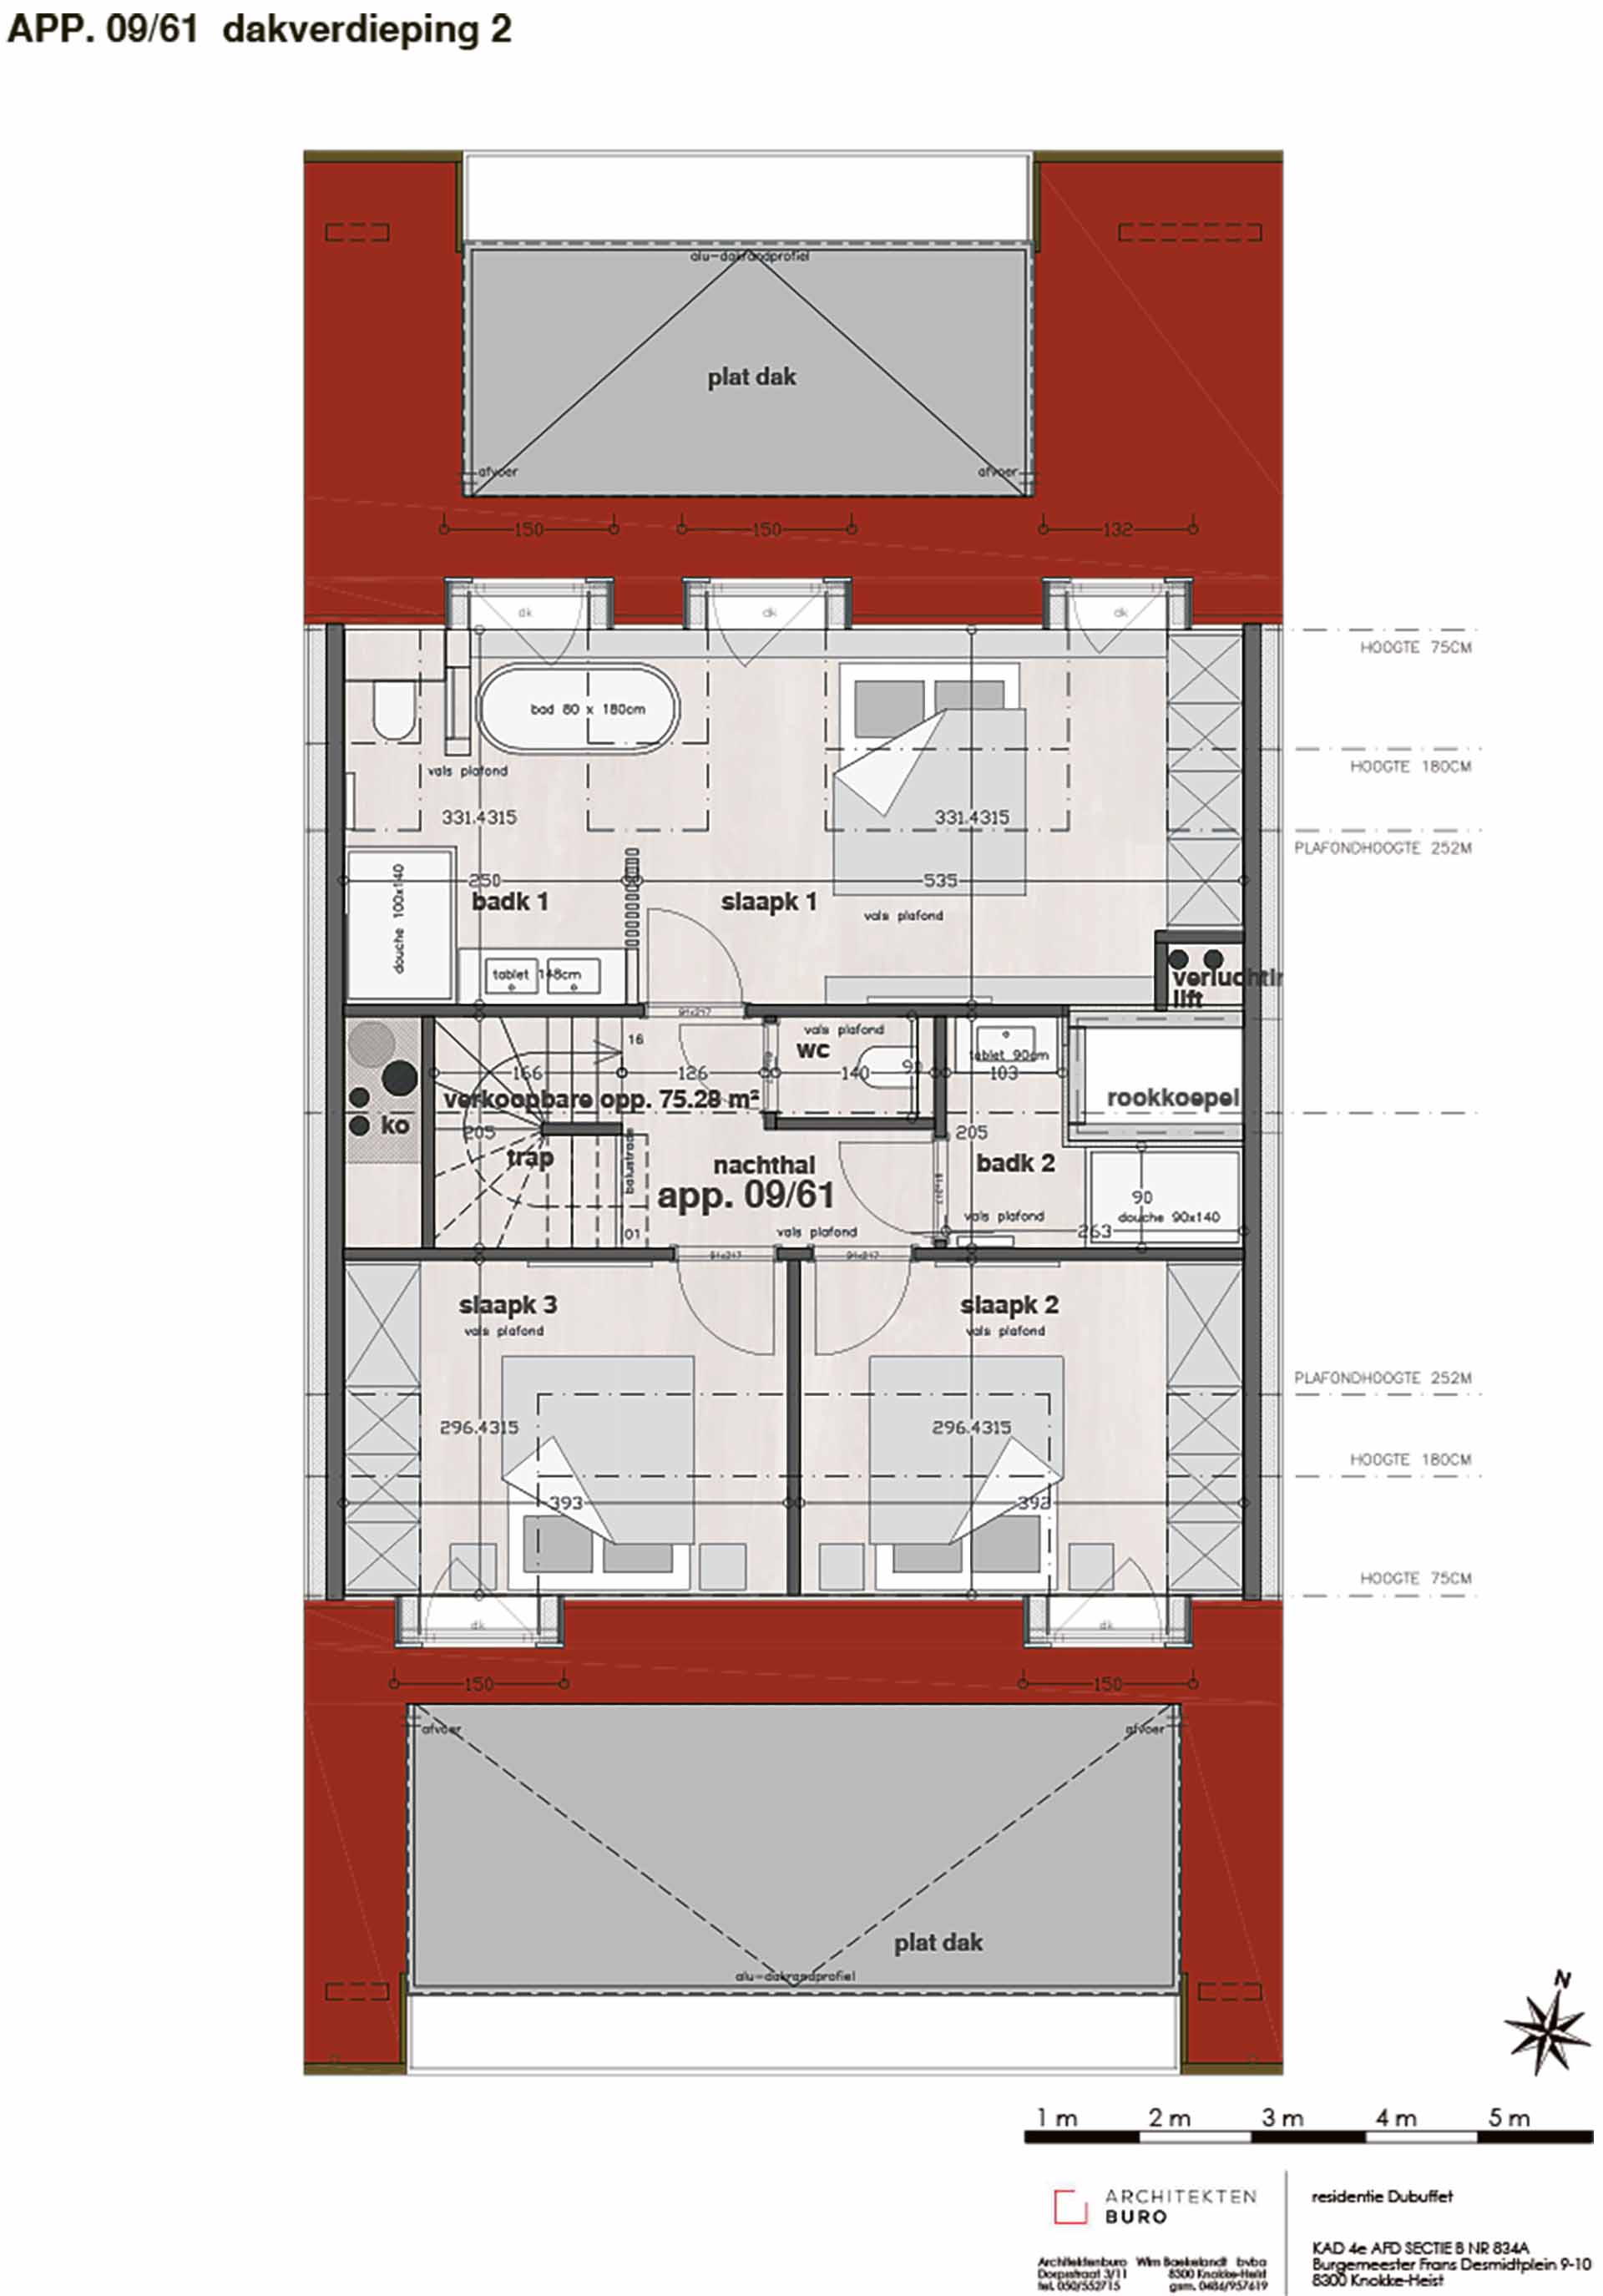 Residentie <br/> Dubuffet - image appartement-te-koop-knokke-residentie-dubuffet-plan-duplex-boven-nieuw on https://hoprom.be